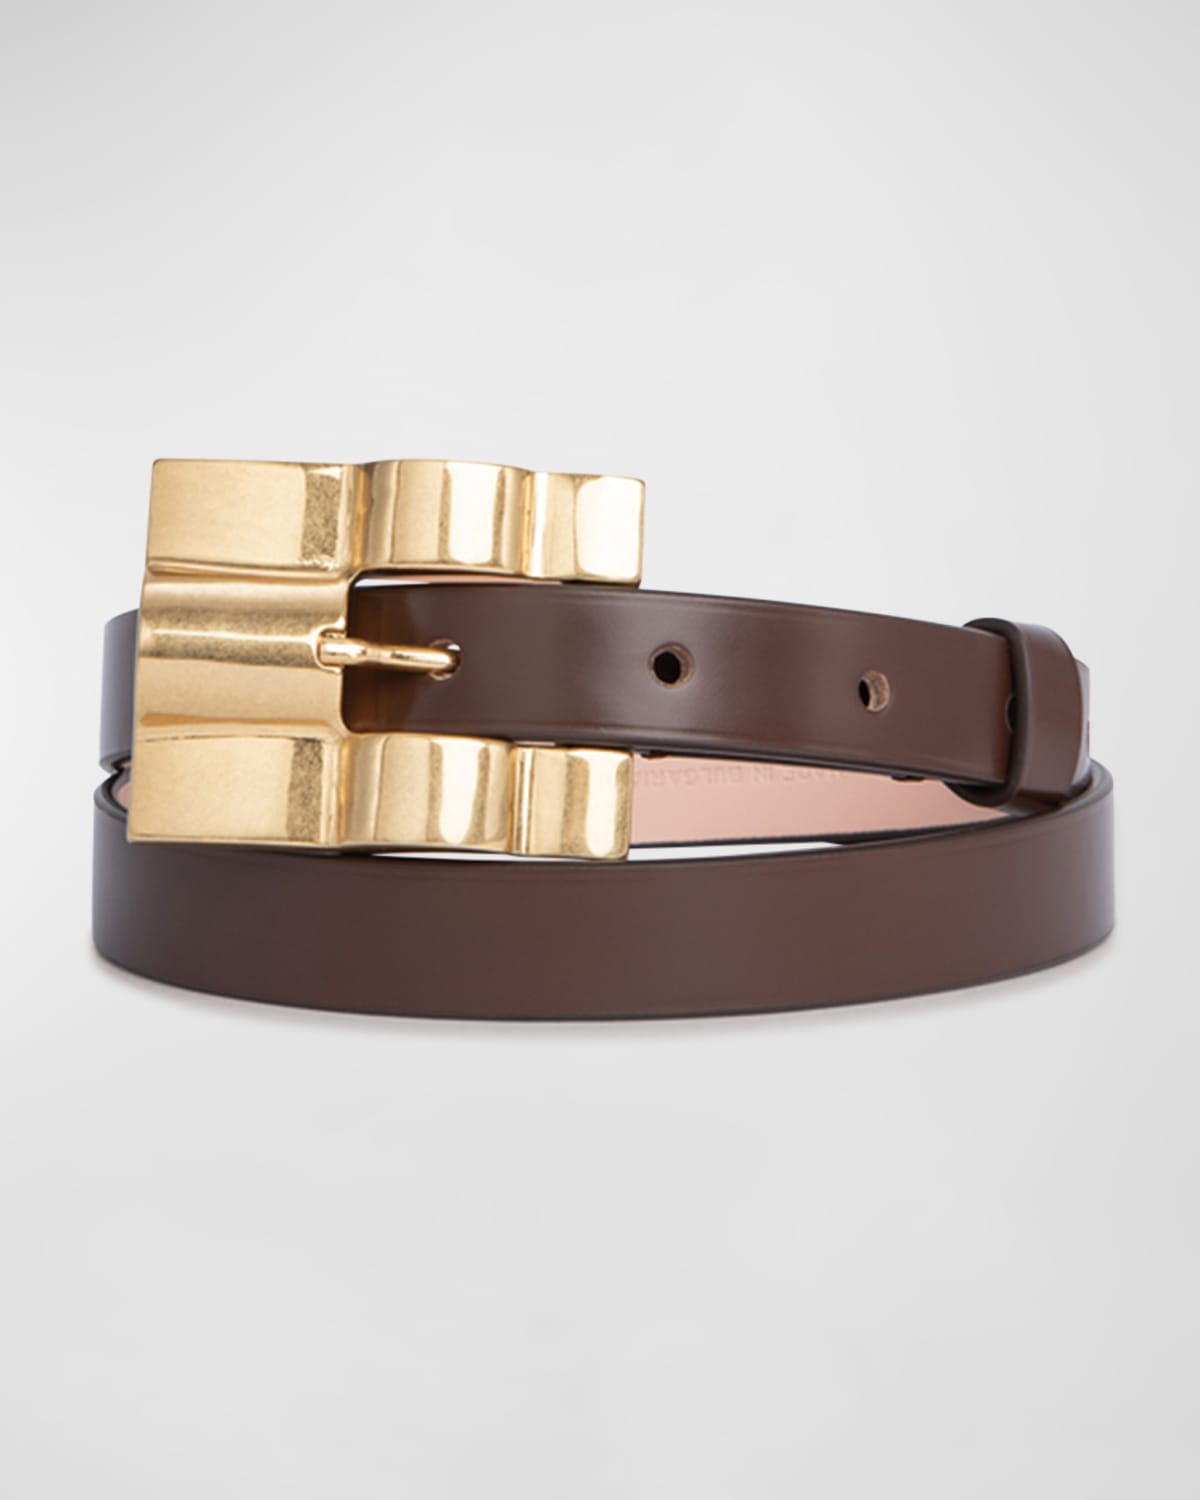 Domino Sequoia Semi-Patent Leather Belt